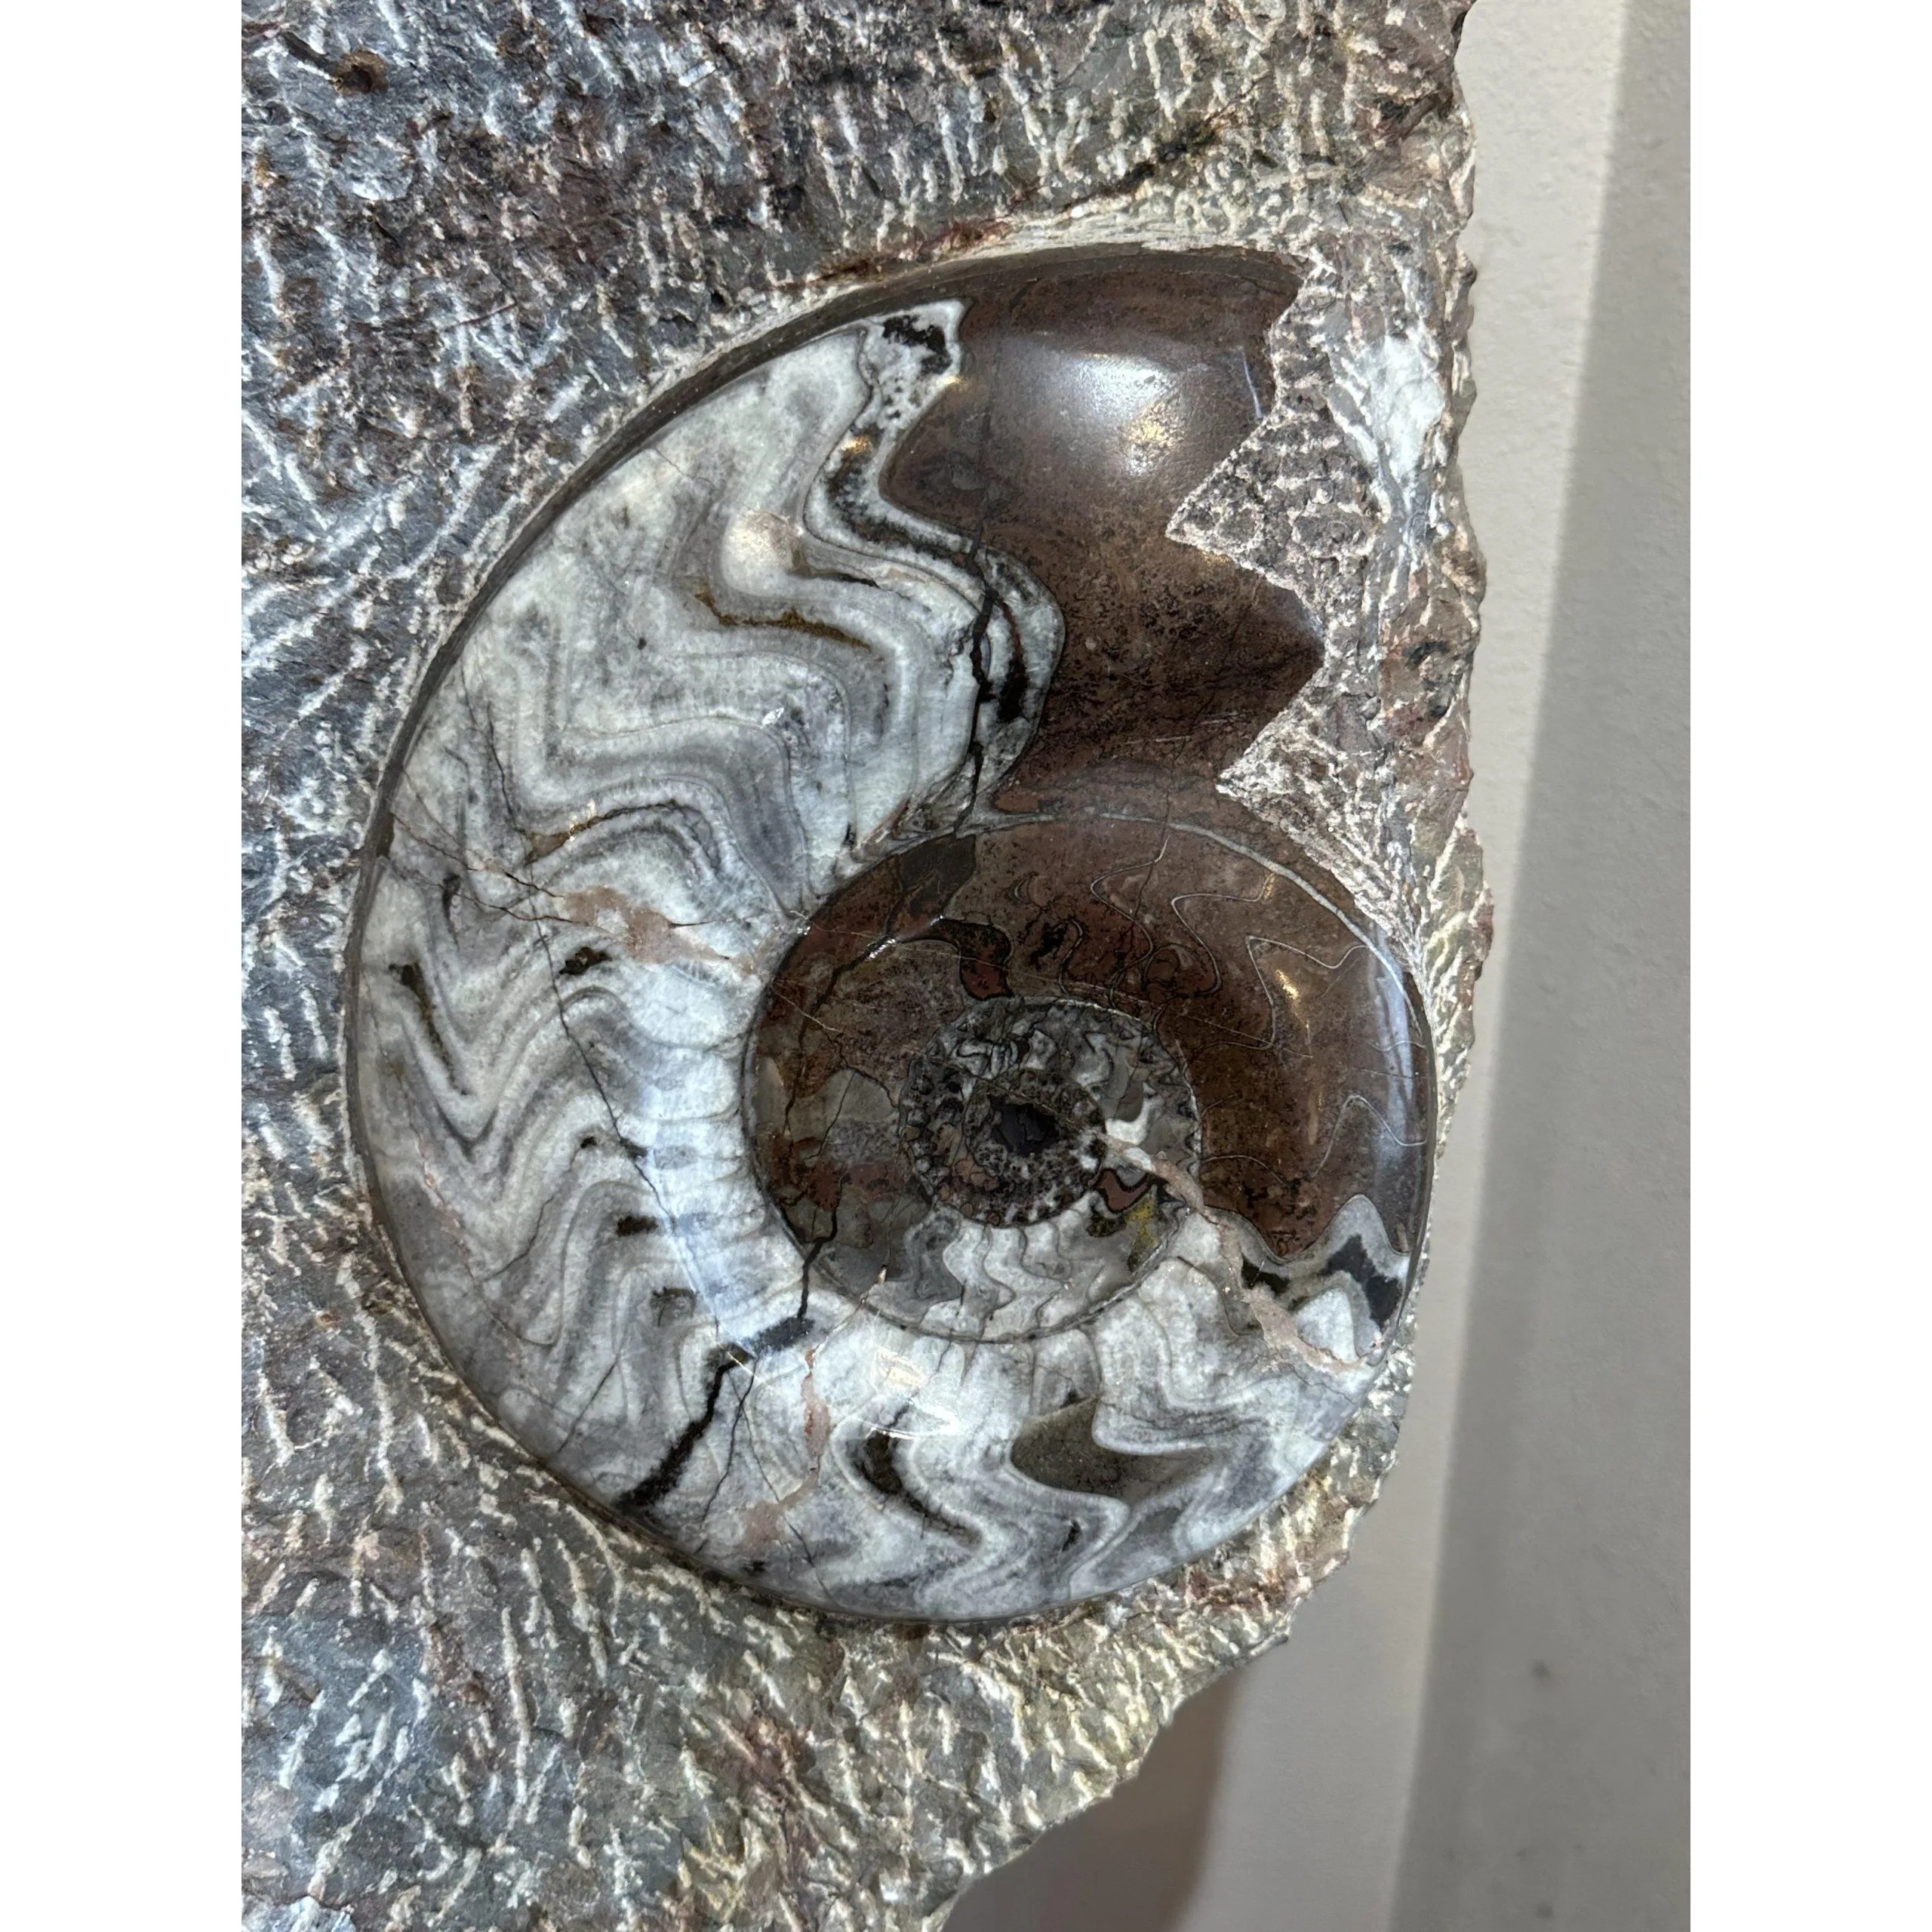 Ammonite and Orthoceras display Prehistoric Online